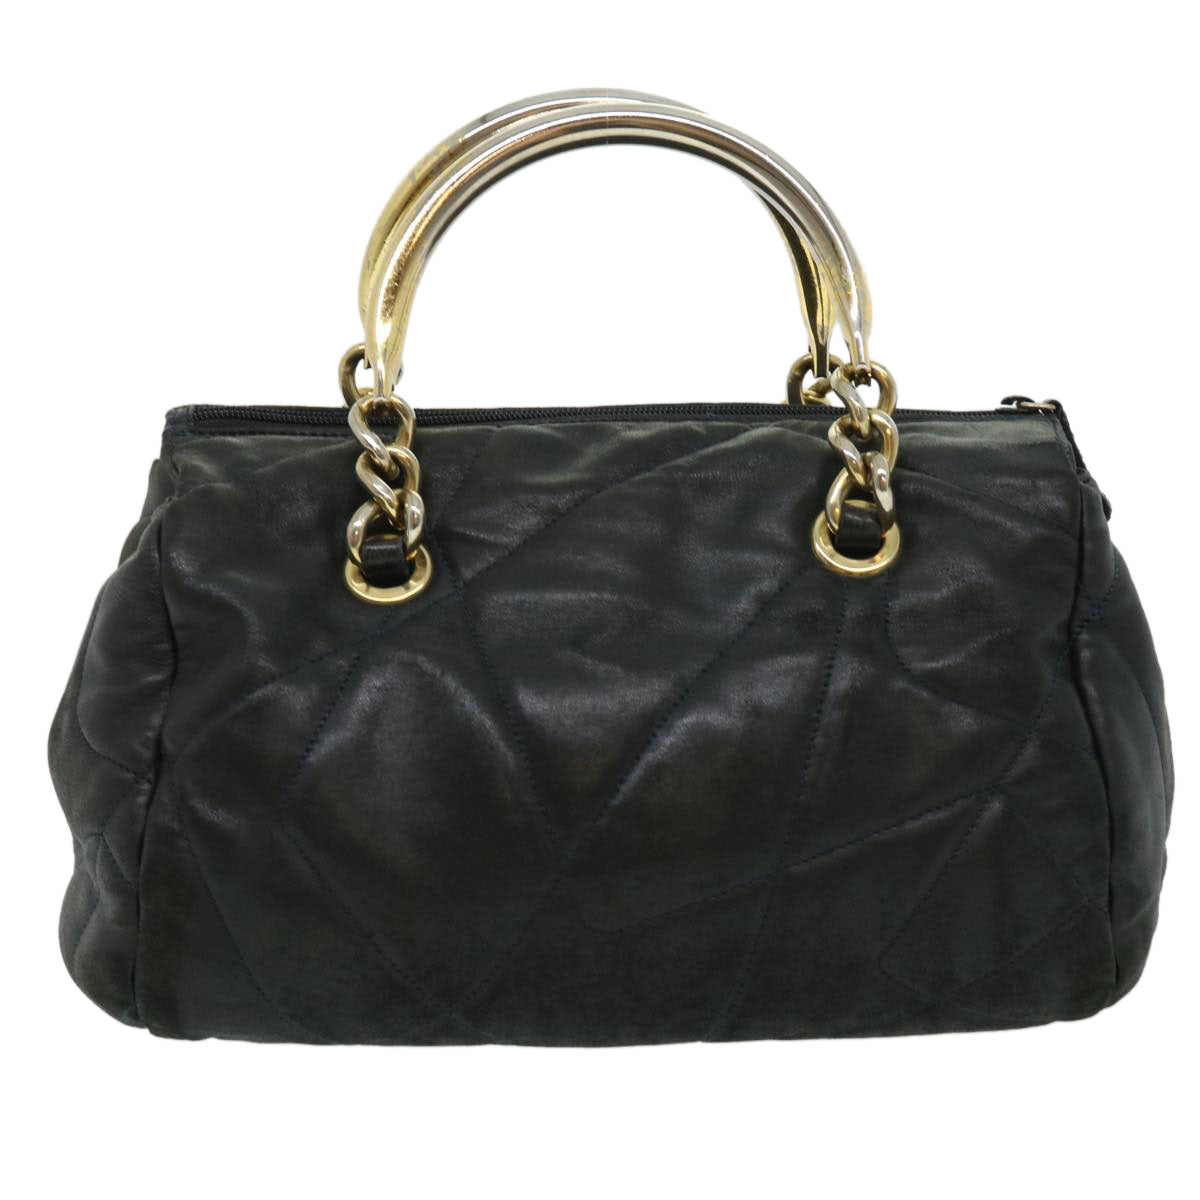 PRADA Quilted Hand Bag Leather Black Auth im370